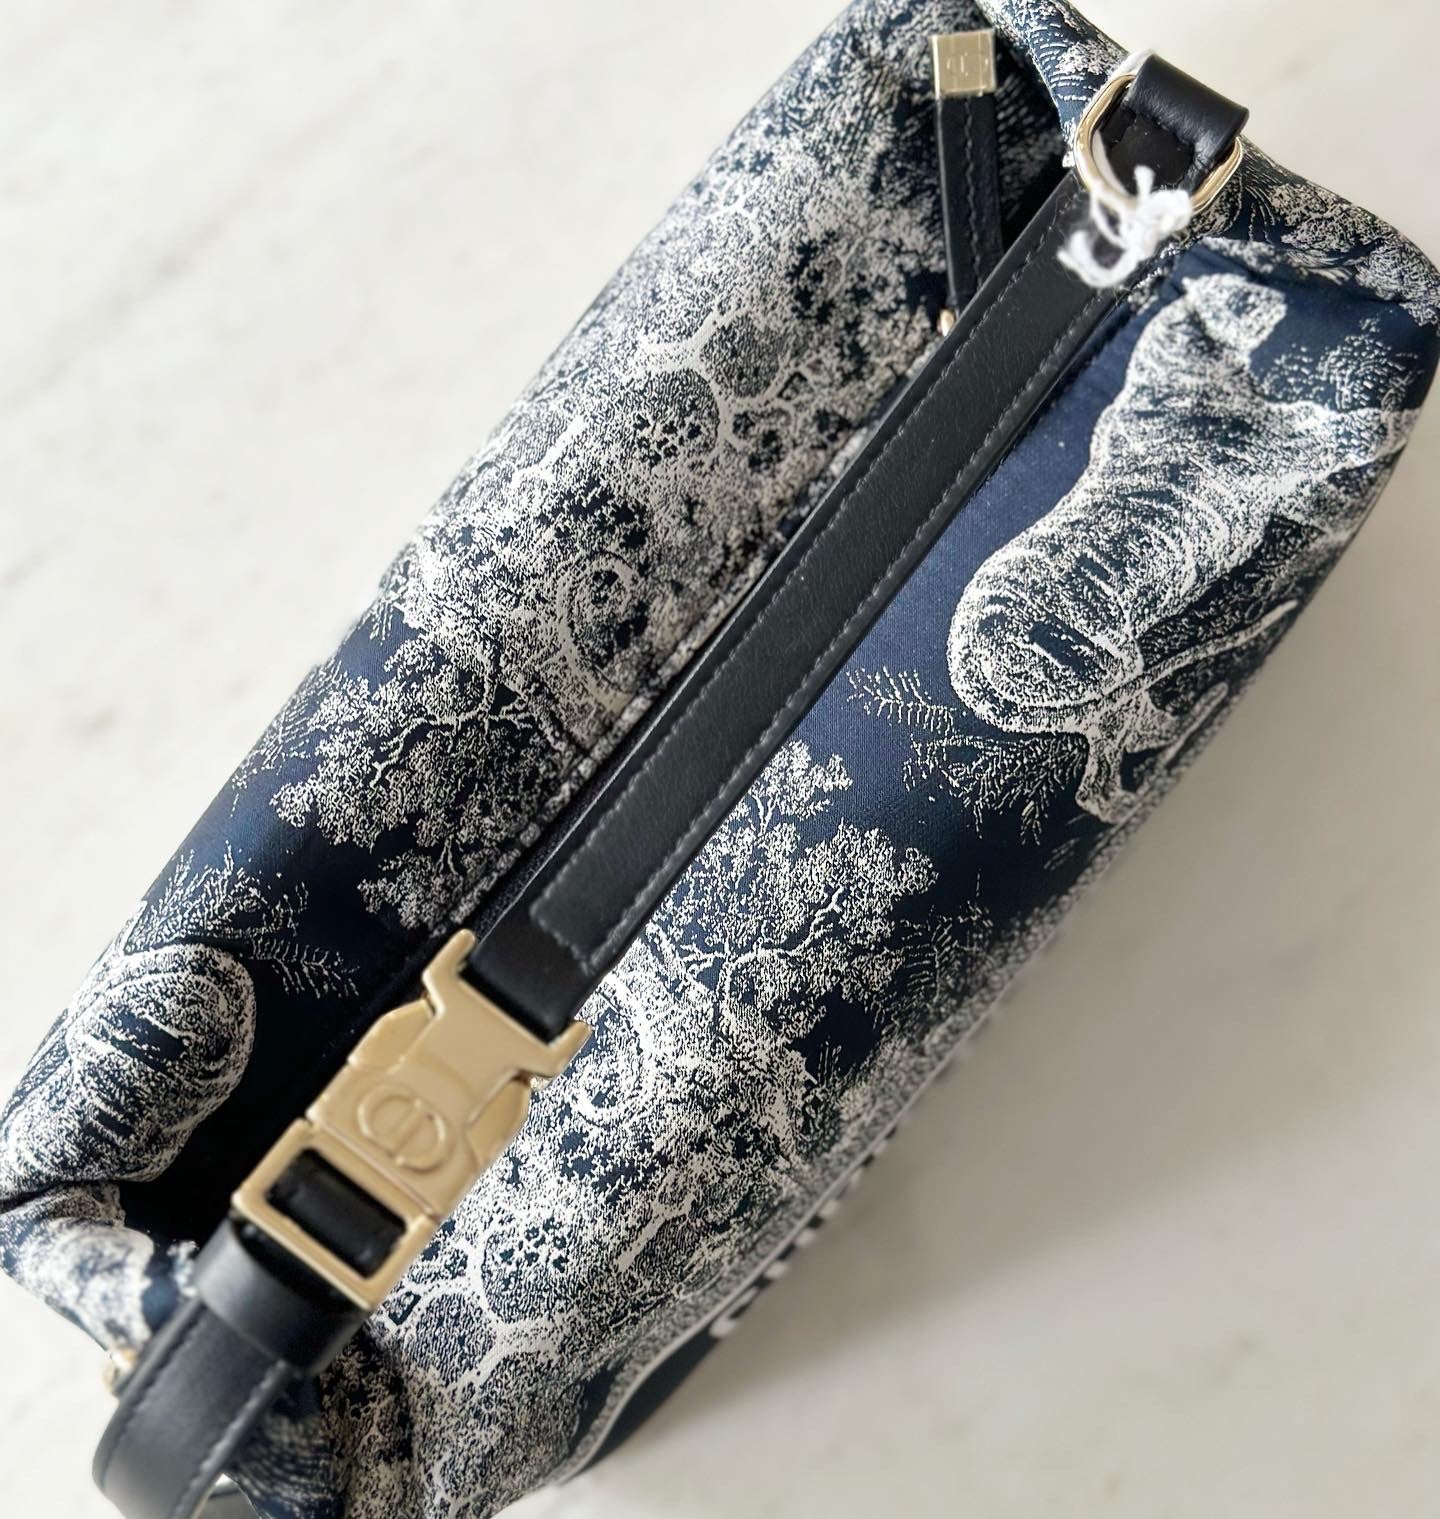 Christian Dior Medium Travel Nomad Pouch bag